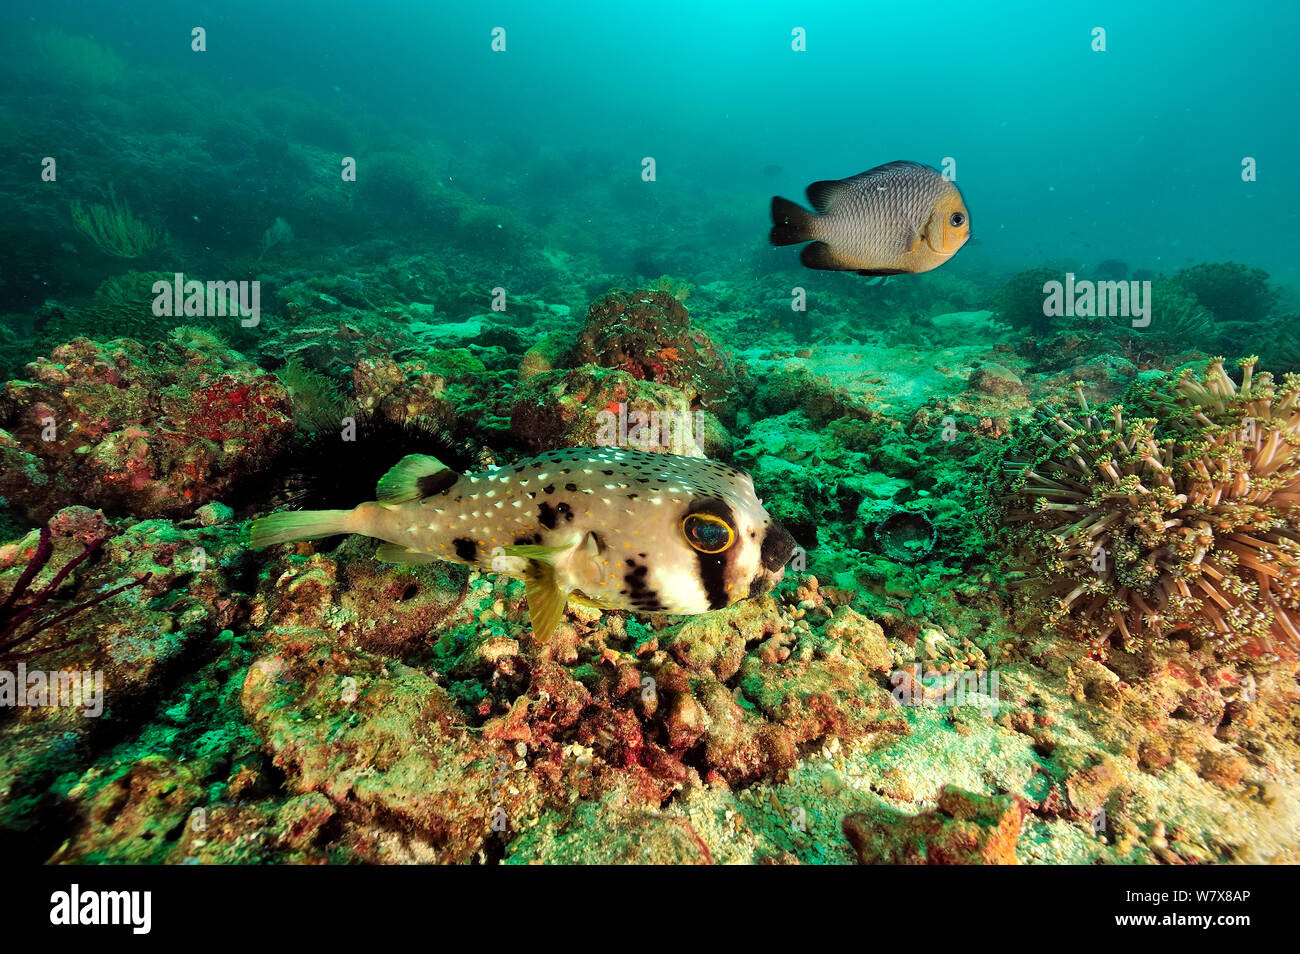 Masked porcupinefish (Diodon liturosus) and a Threespot dascyllus / damselfish (Dascyllus trimaculatus), Daymaniyat islands, Oman. Gulf of Oman. Stock Photo